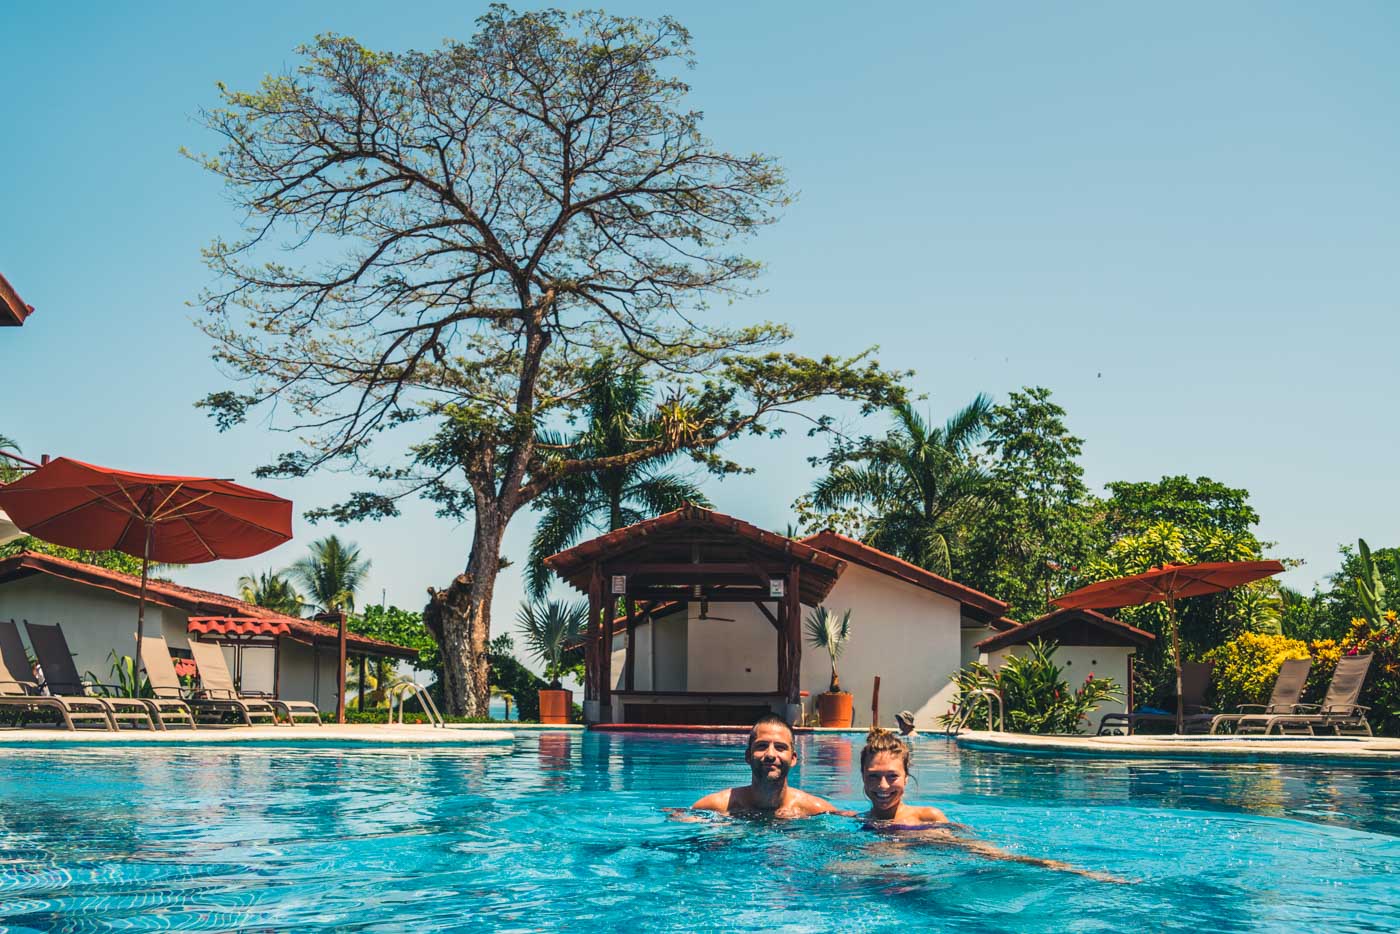 Puerto Jimenez hotels: Agua Dulce Resort in Costa Rica